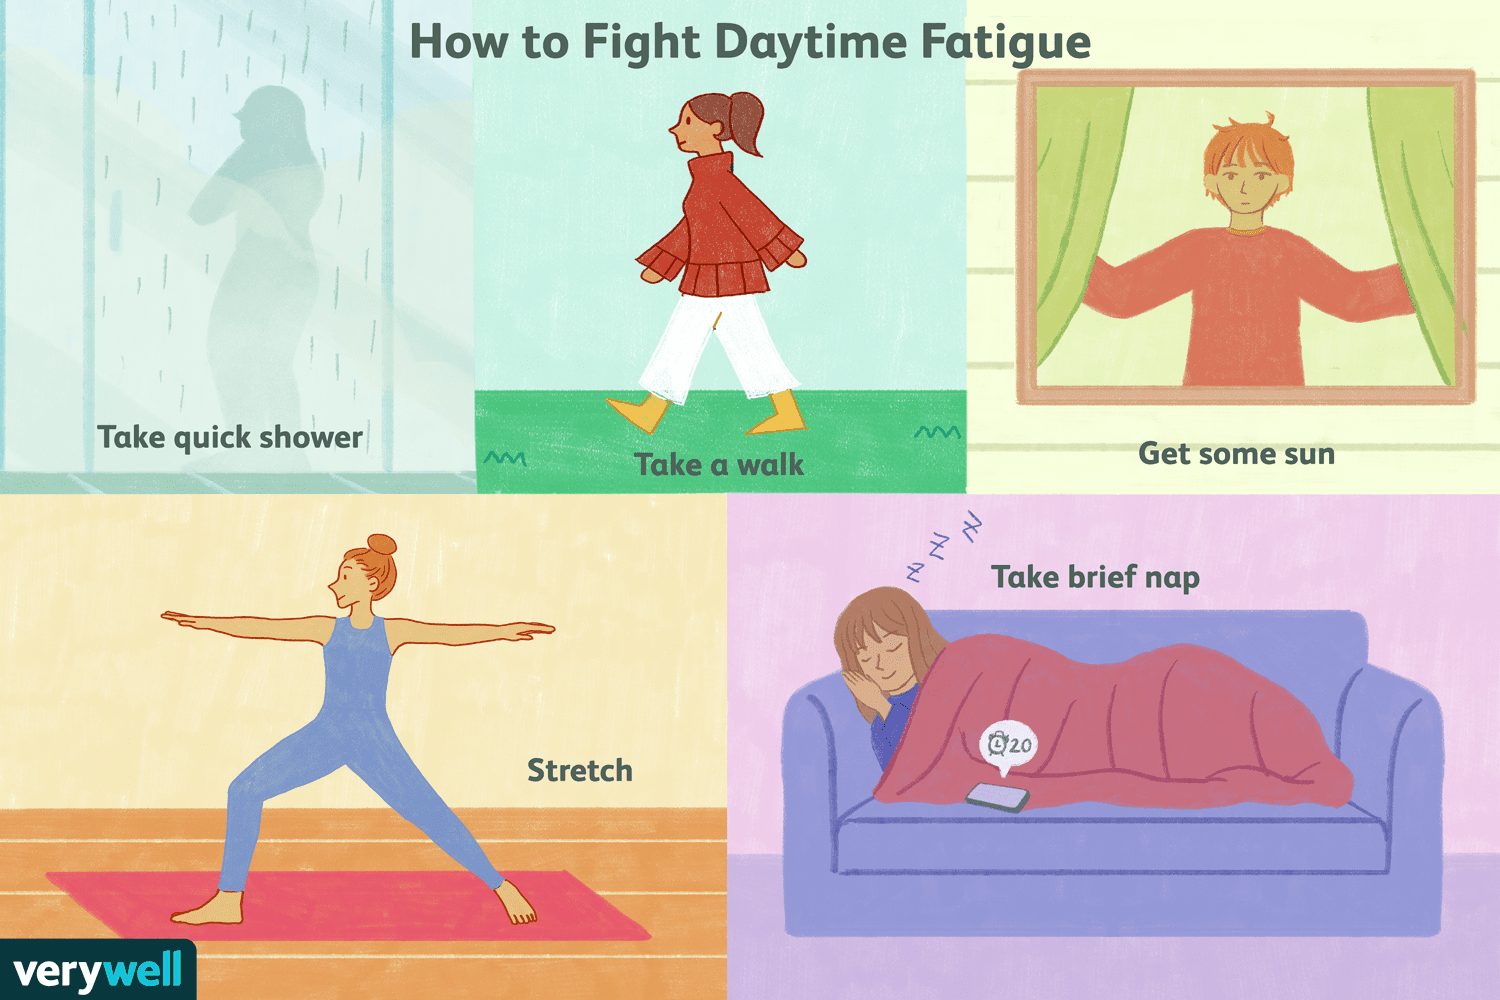 5 ways to fight daytime fatigue